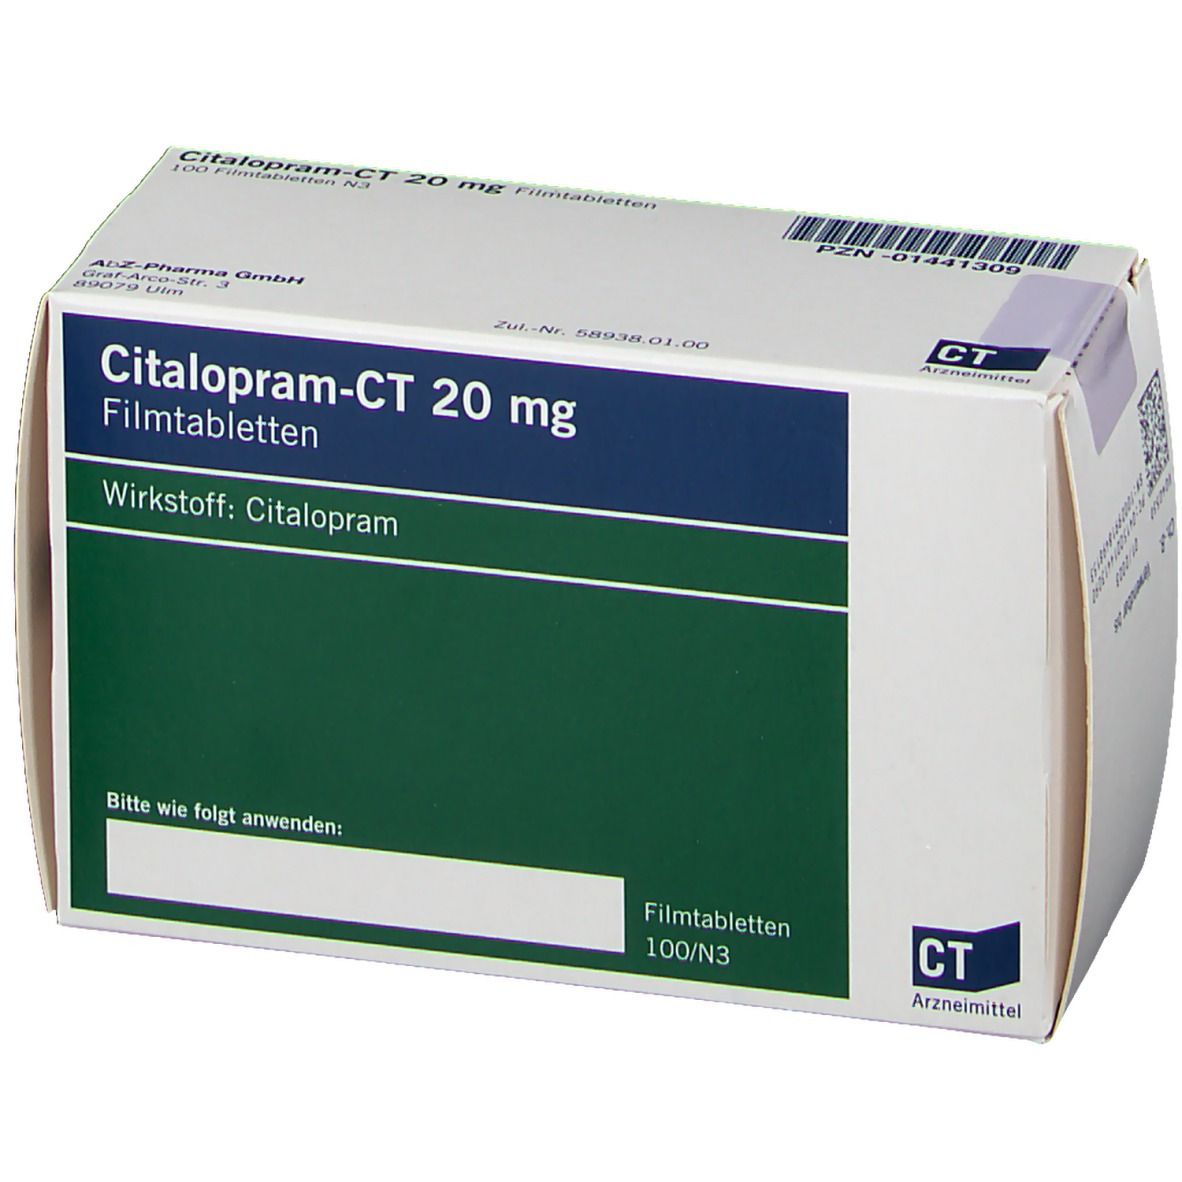 Citalopram - Ct 20Mg